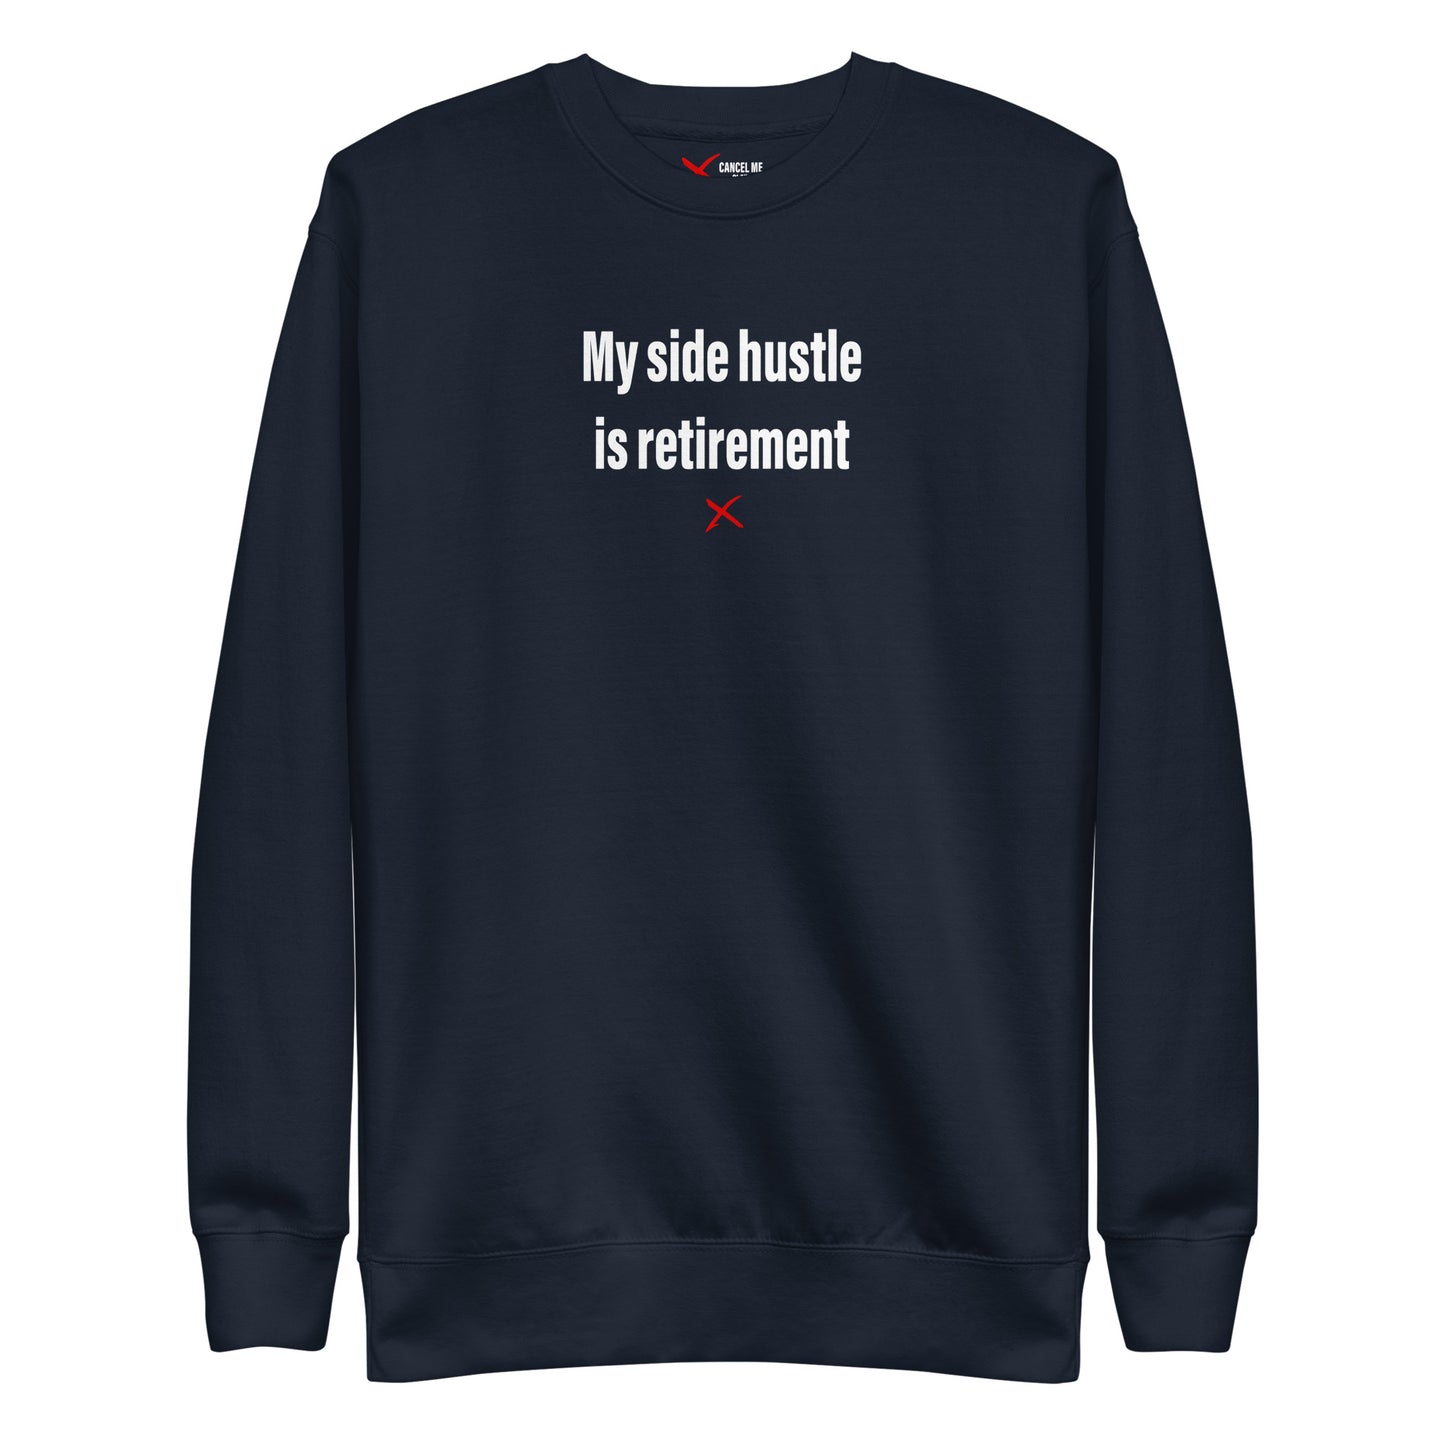 My side hustle is retirement - Sweatshirt